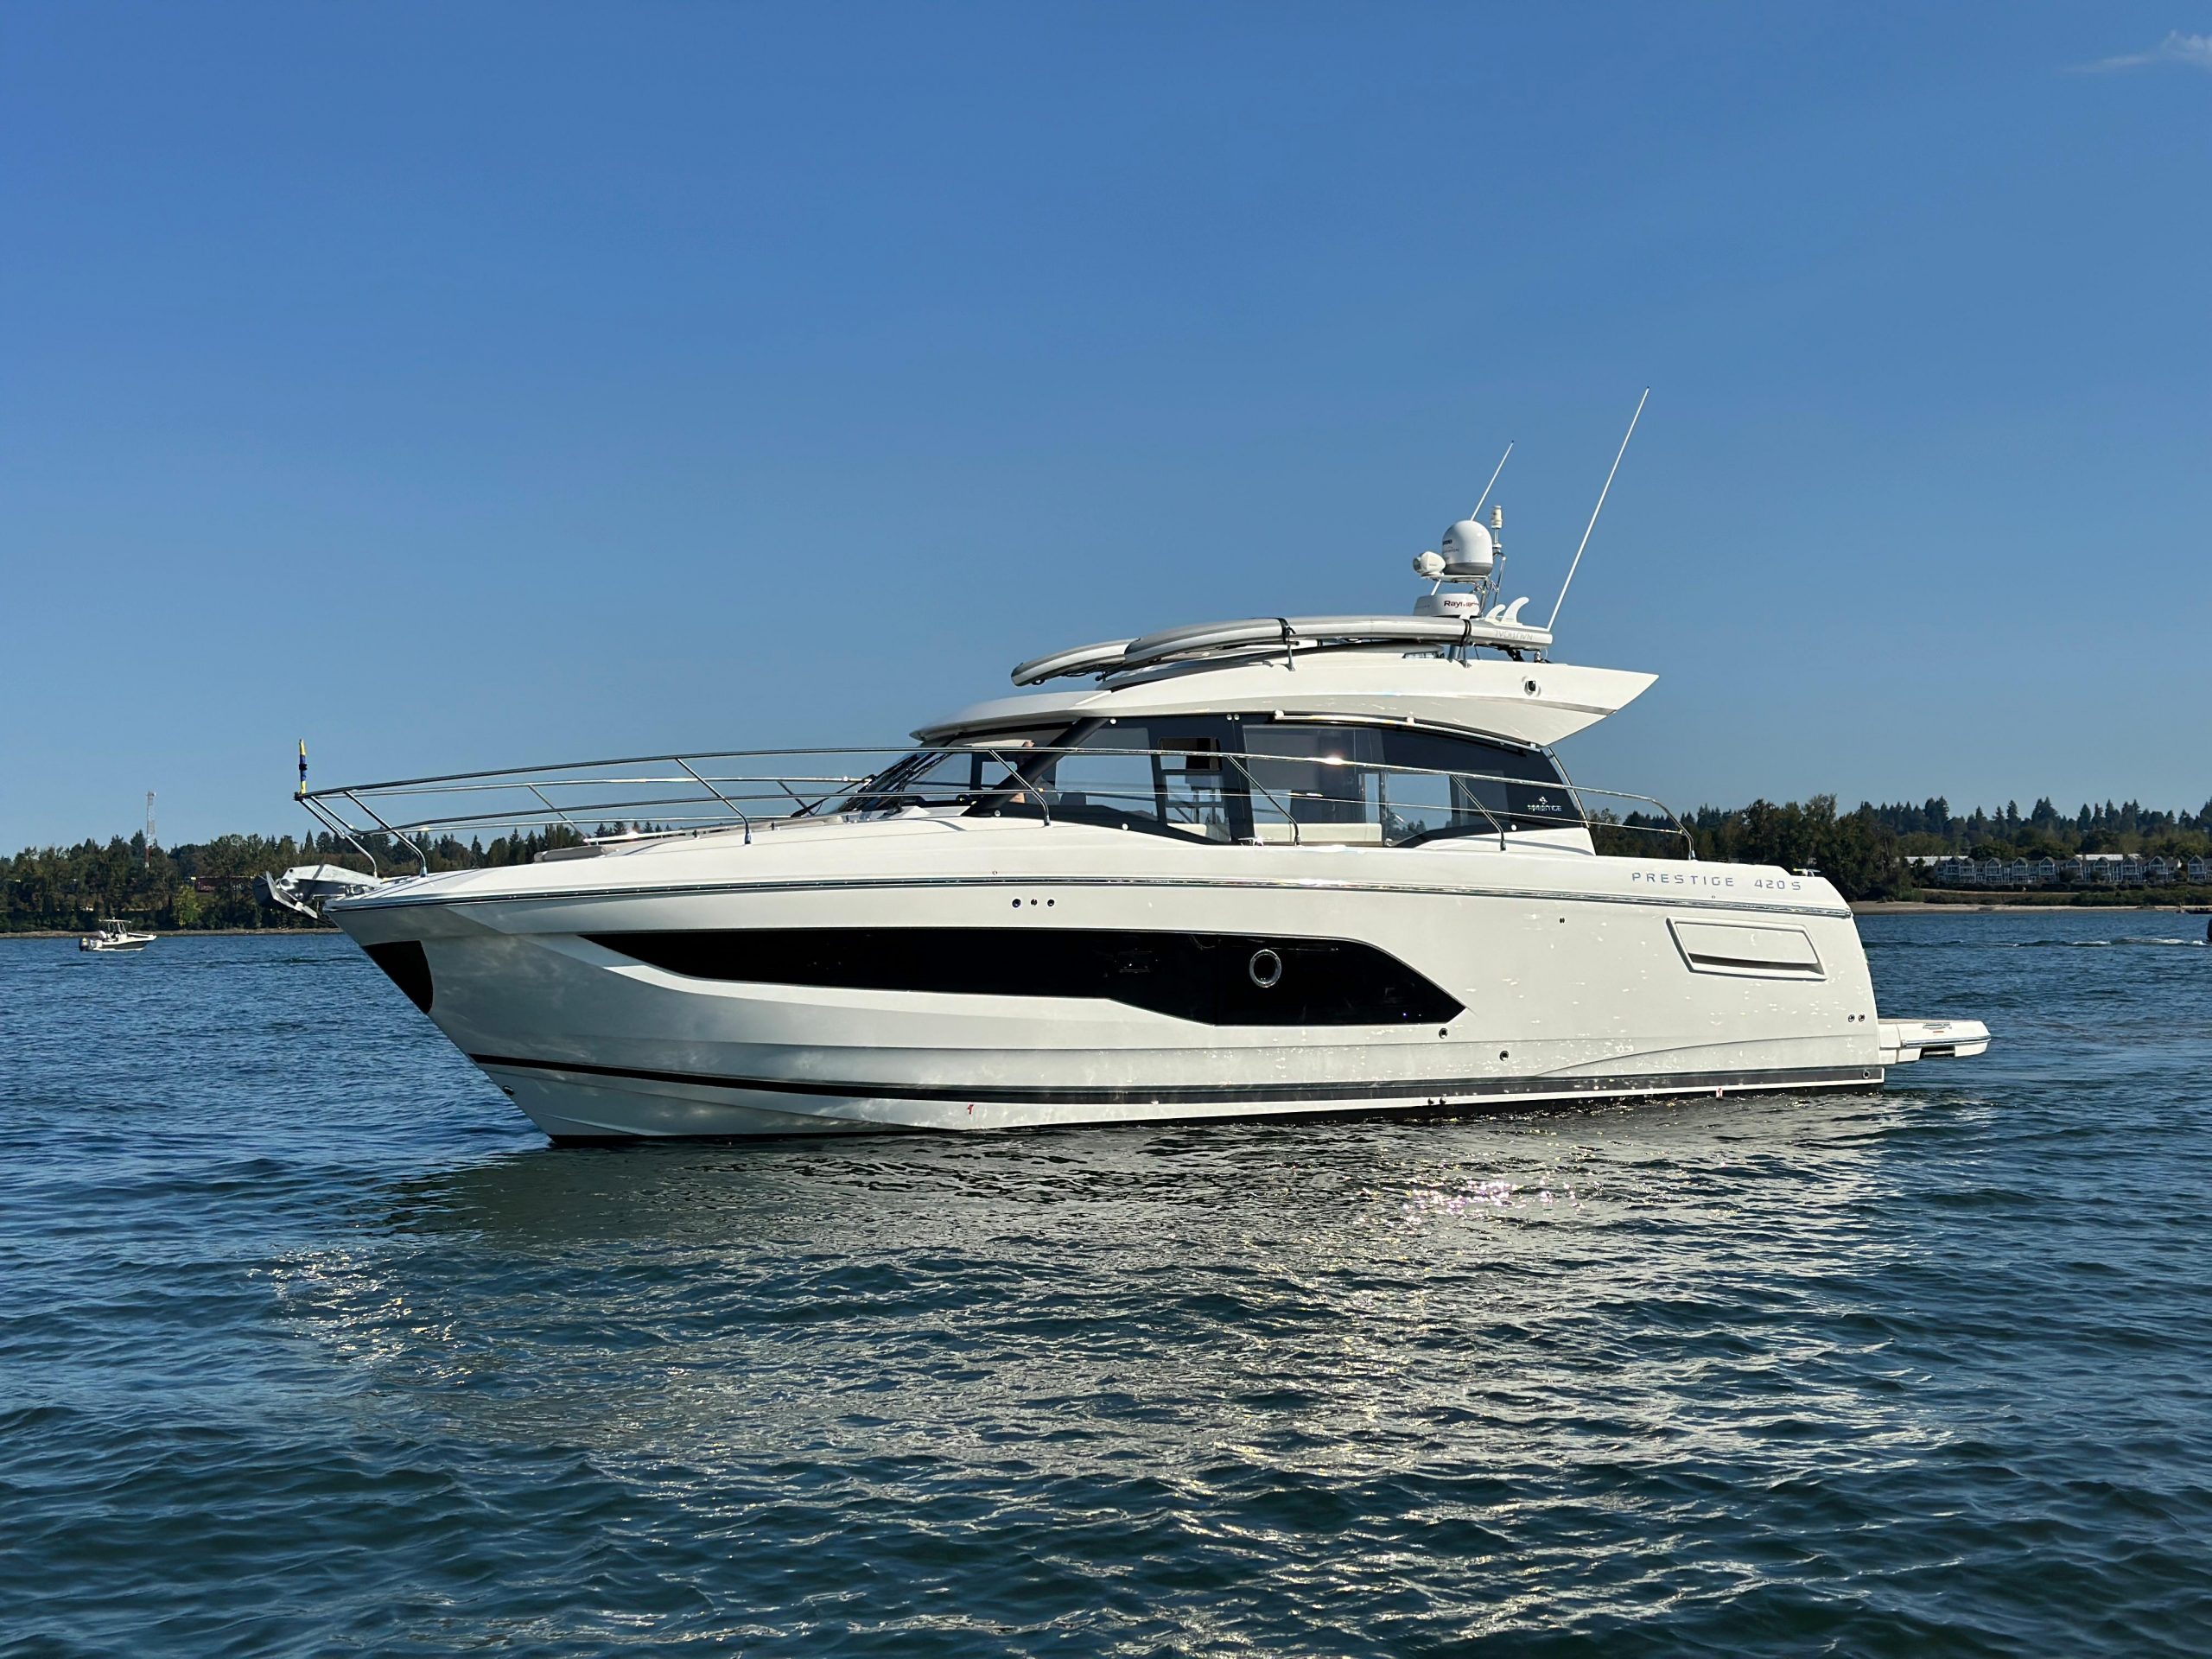 Prestige 420: A Good Motor Yacht To Charter